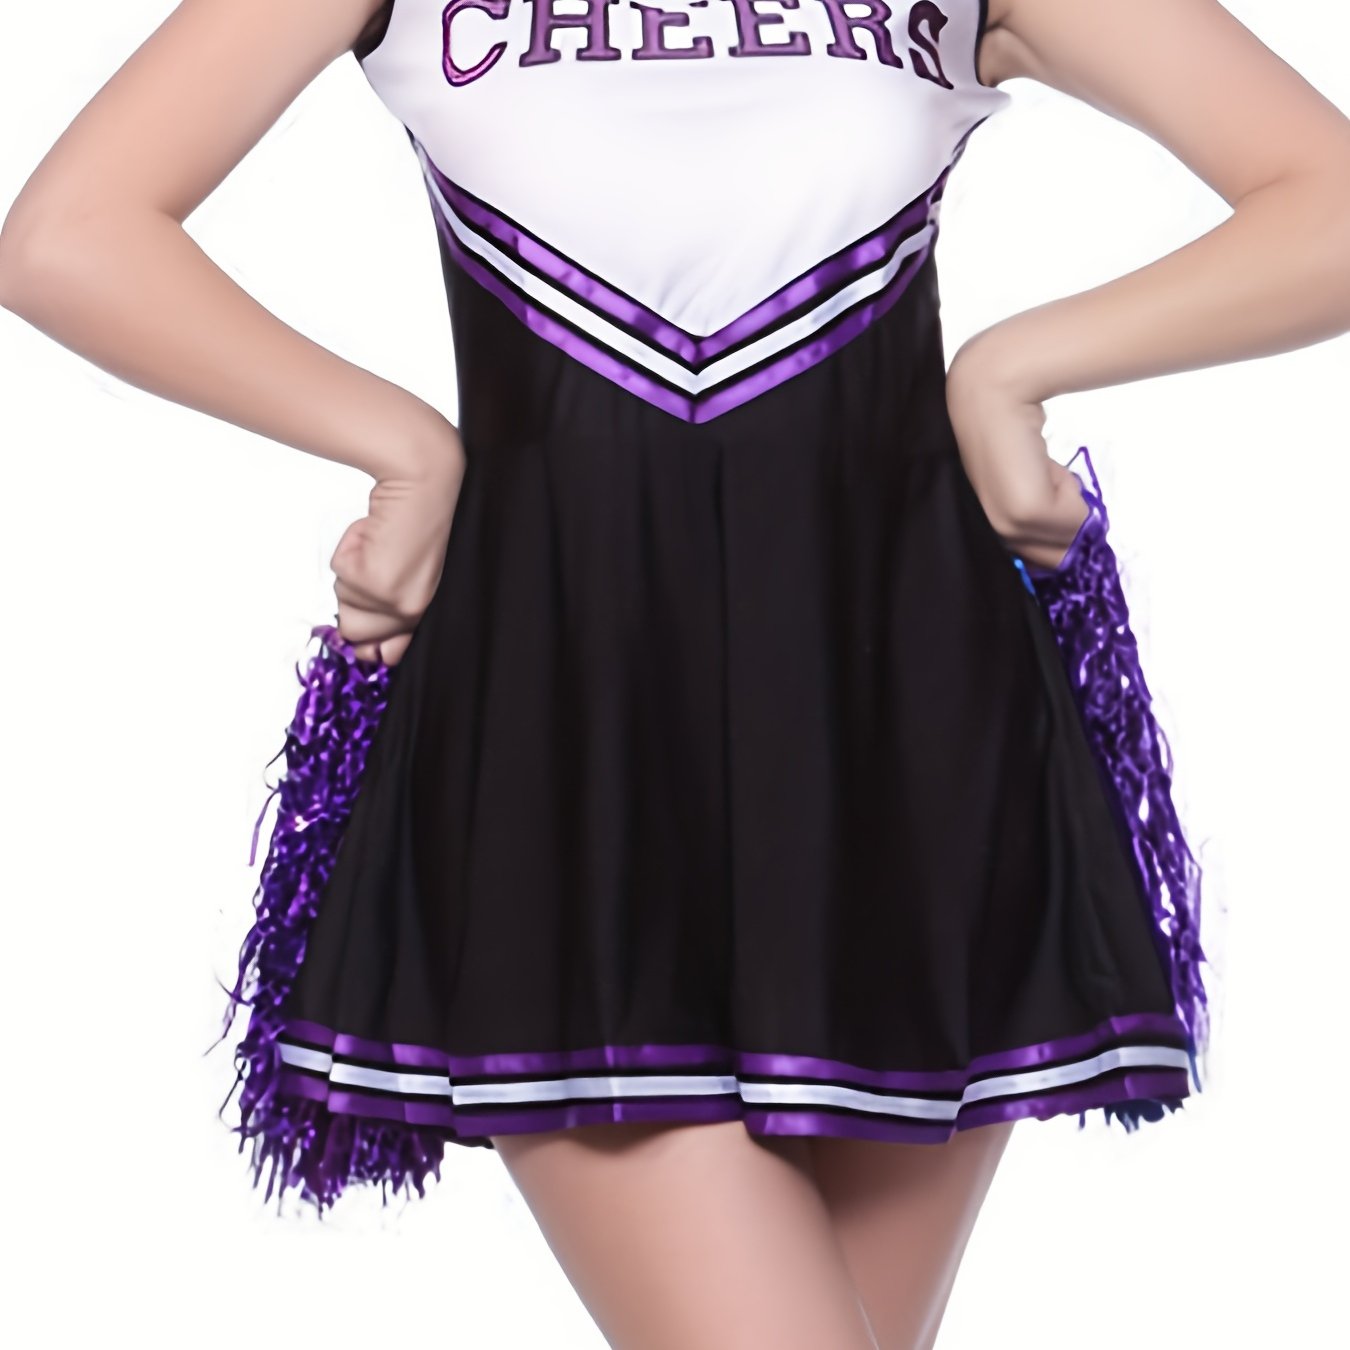 Classic Cheerleader Dress, Cheer Uniform Carnival Costume For Cheerleading,  Dancing, Performance, Women's Clothing